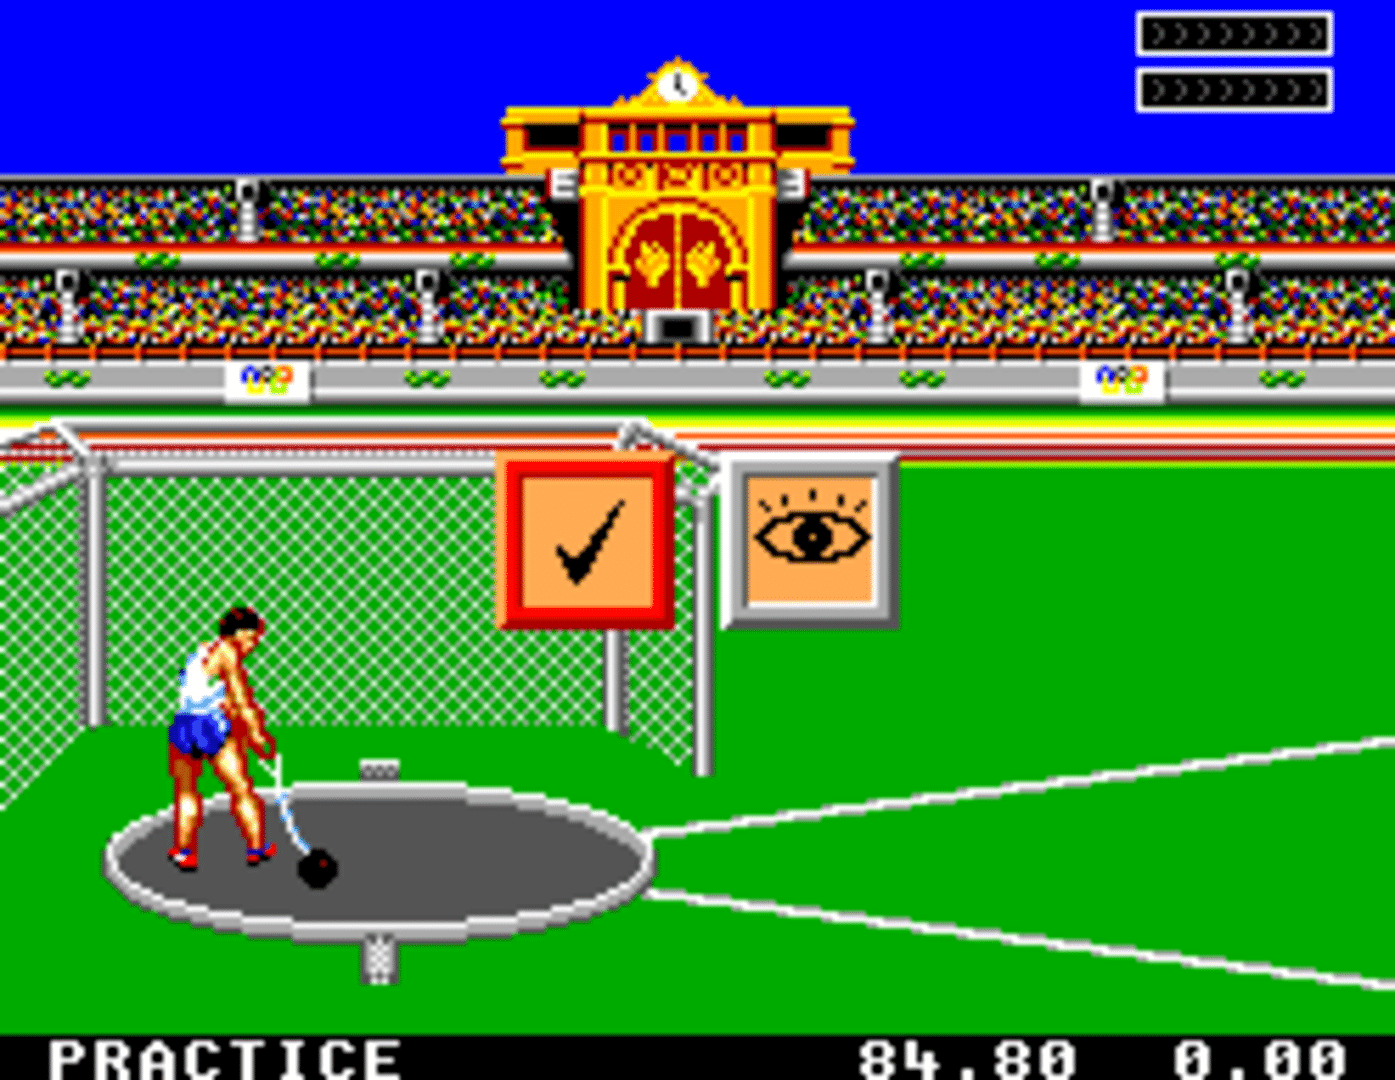 Olympic Gold: Barcelona '92 screenshot